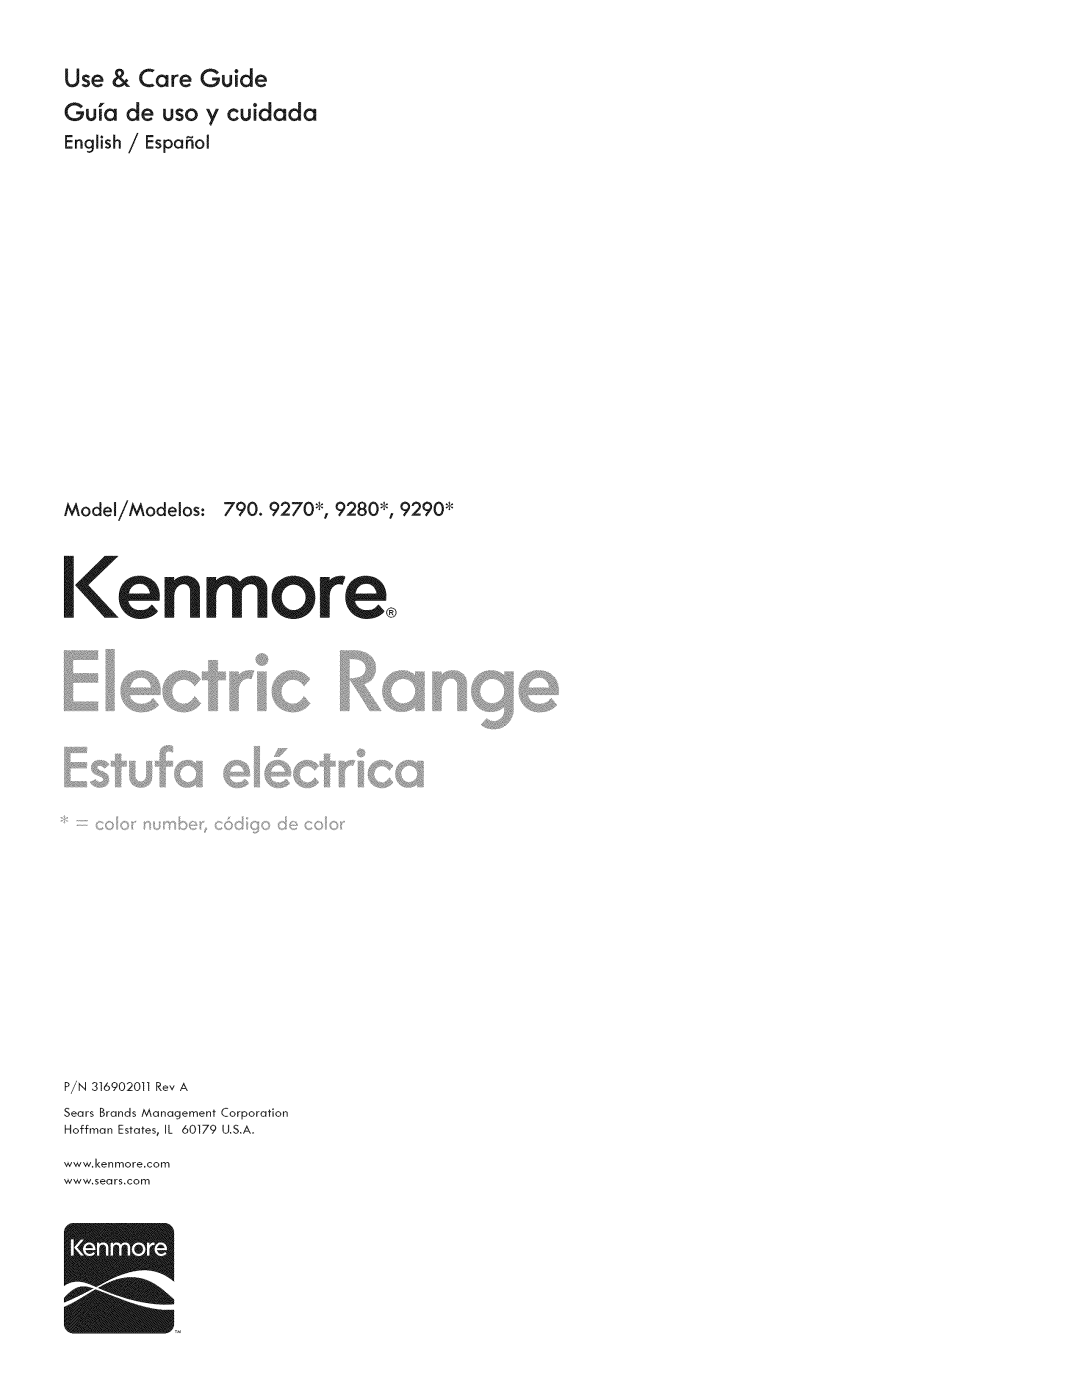 Kenmore 790.9290, 790.9280 manual I<en, English / Espafiol, Model/Modelos: 790.9270%9280%9290 _, P/N 316902011 Rev A 